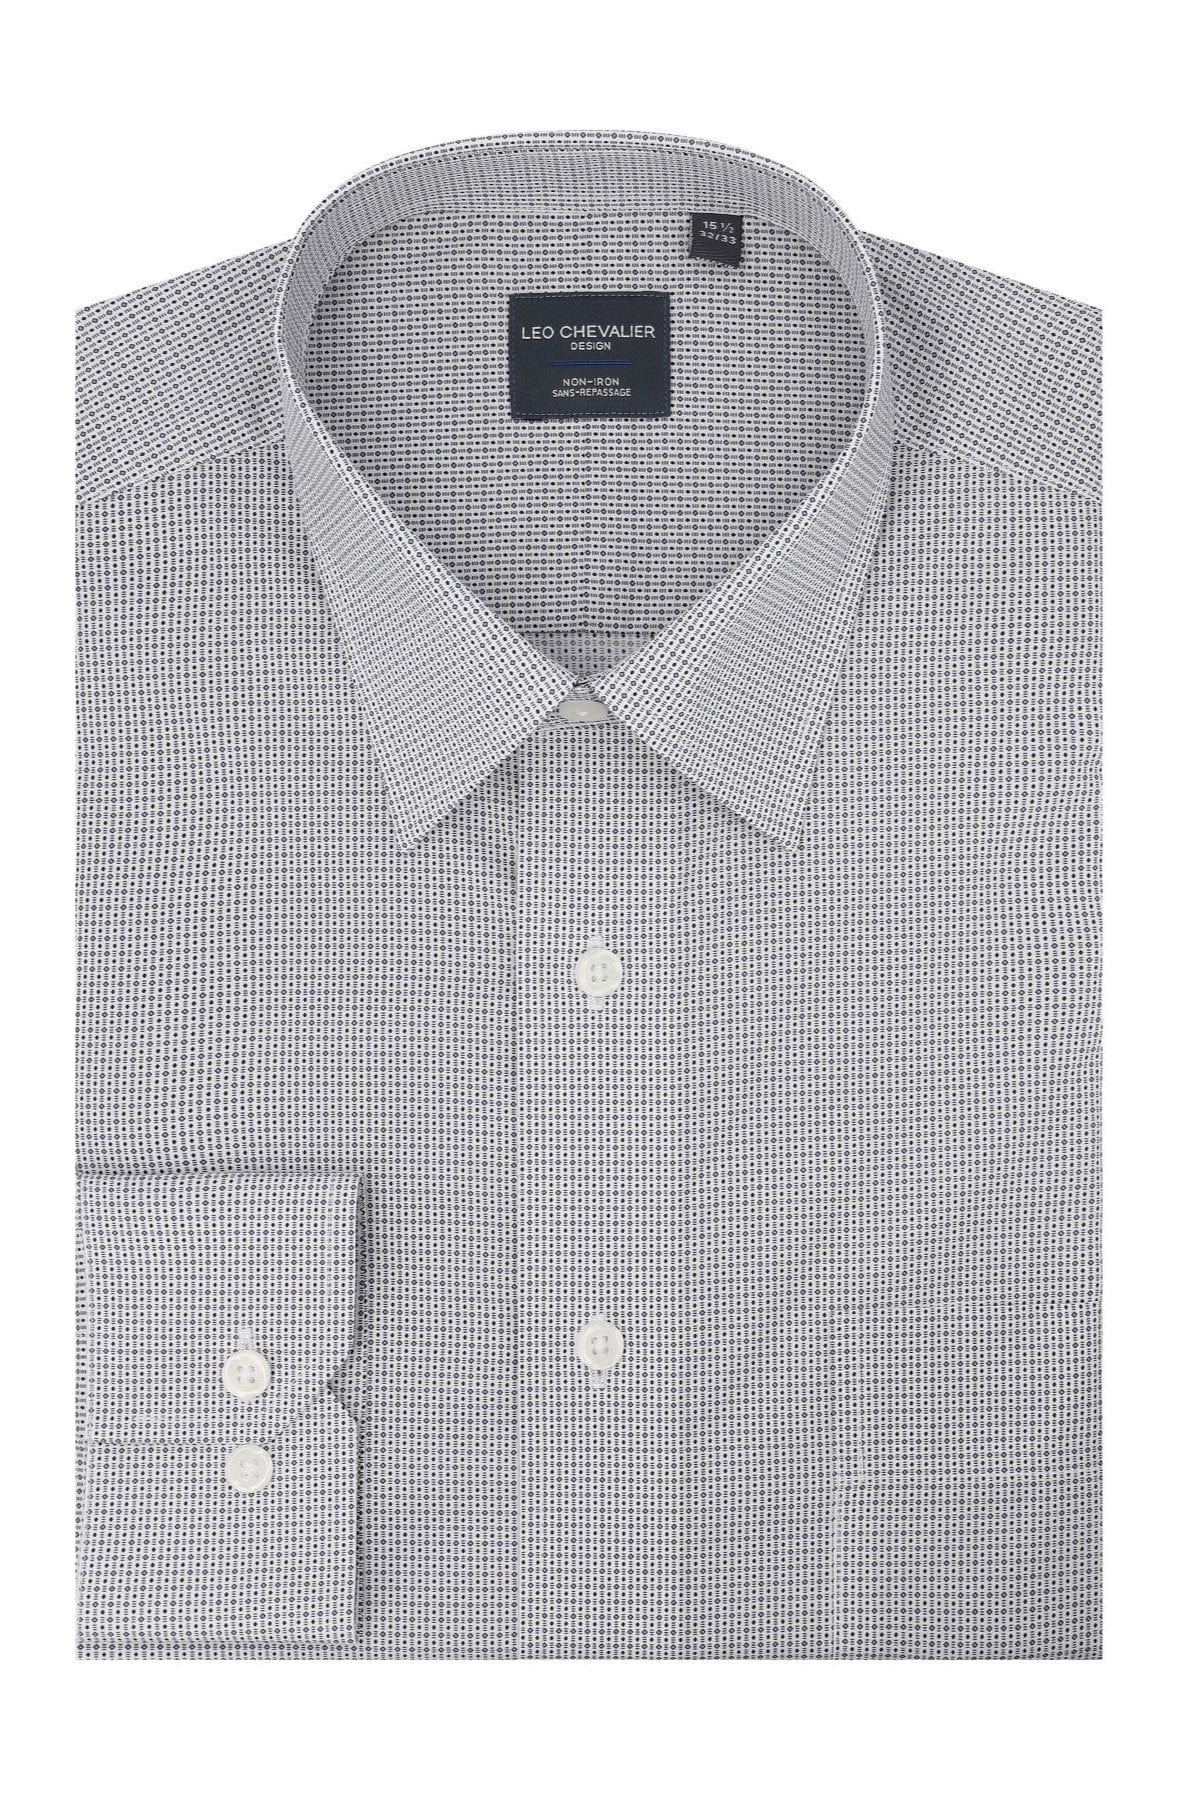 Leo Chevalier Design Men's Regular-Fit Blue Print Business Shirts